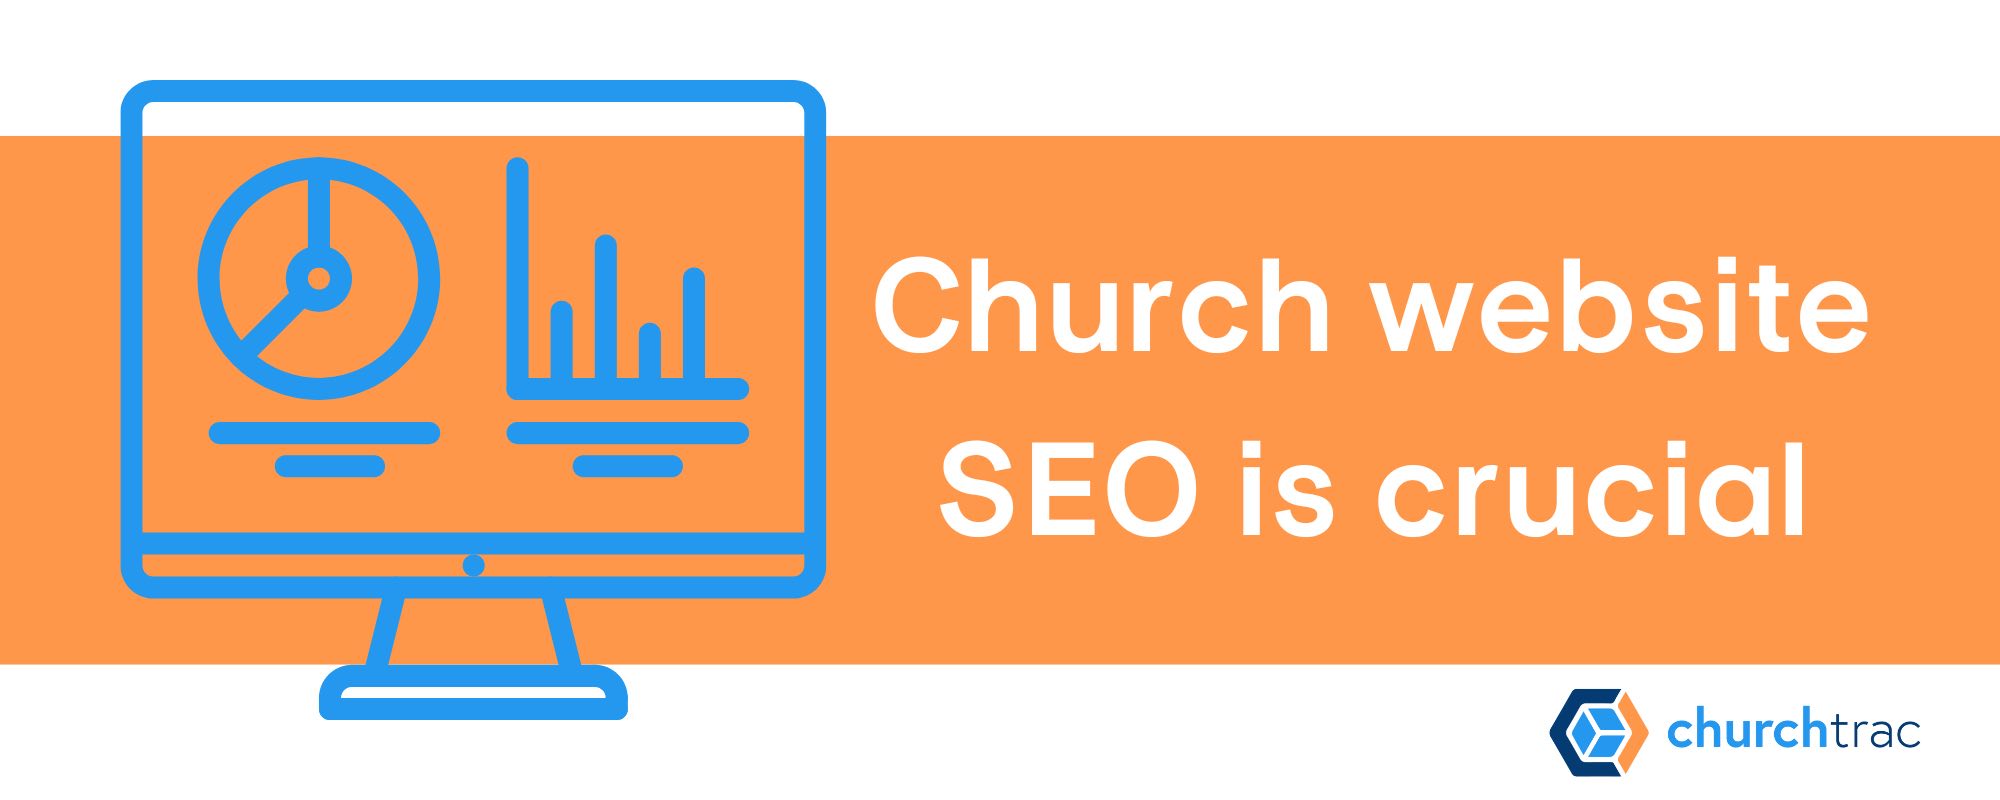 Church website SEO is crucial